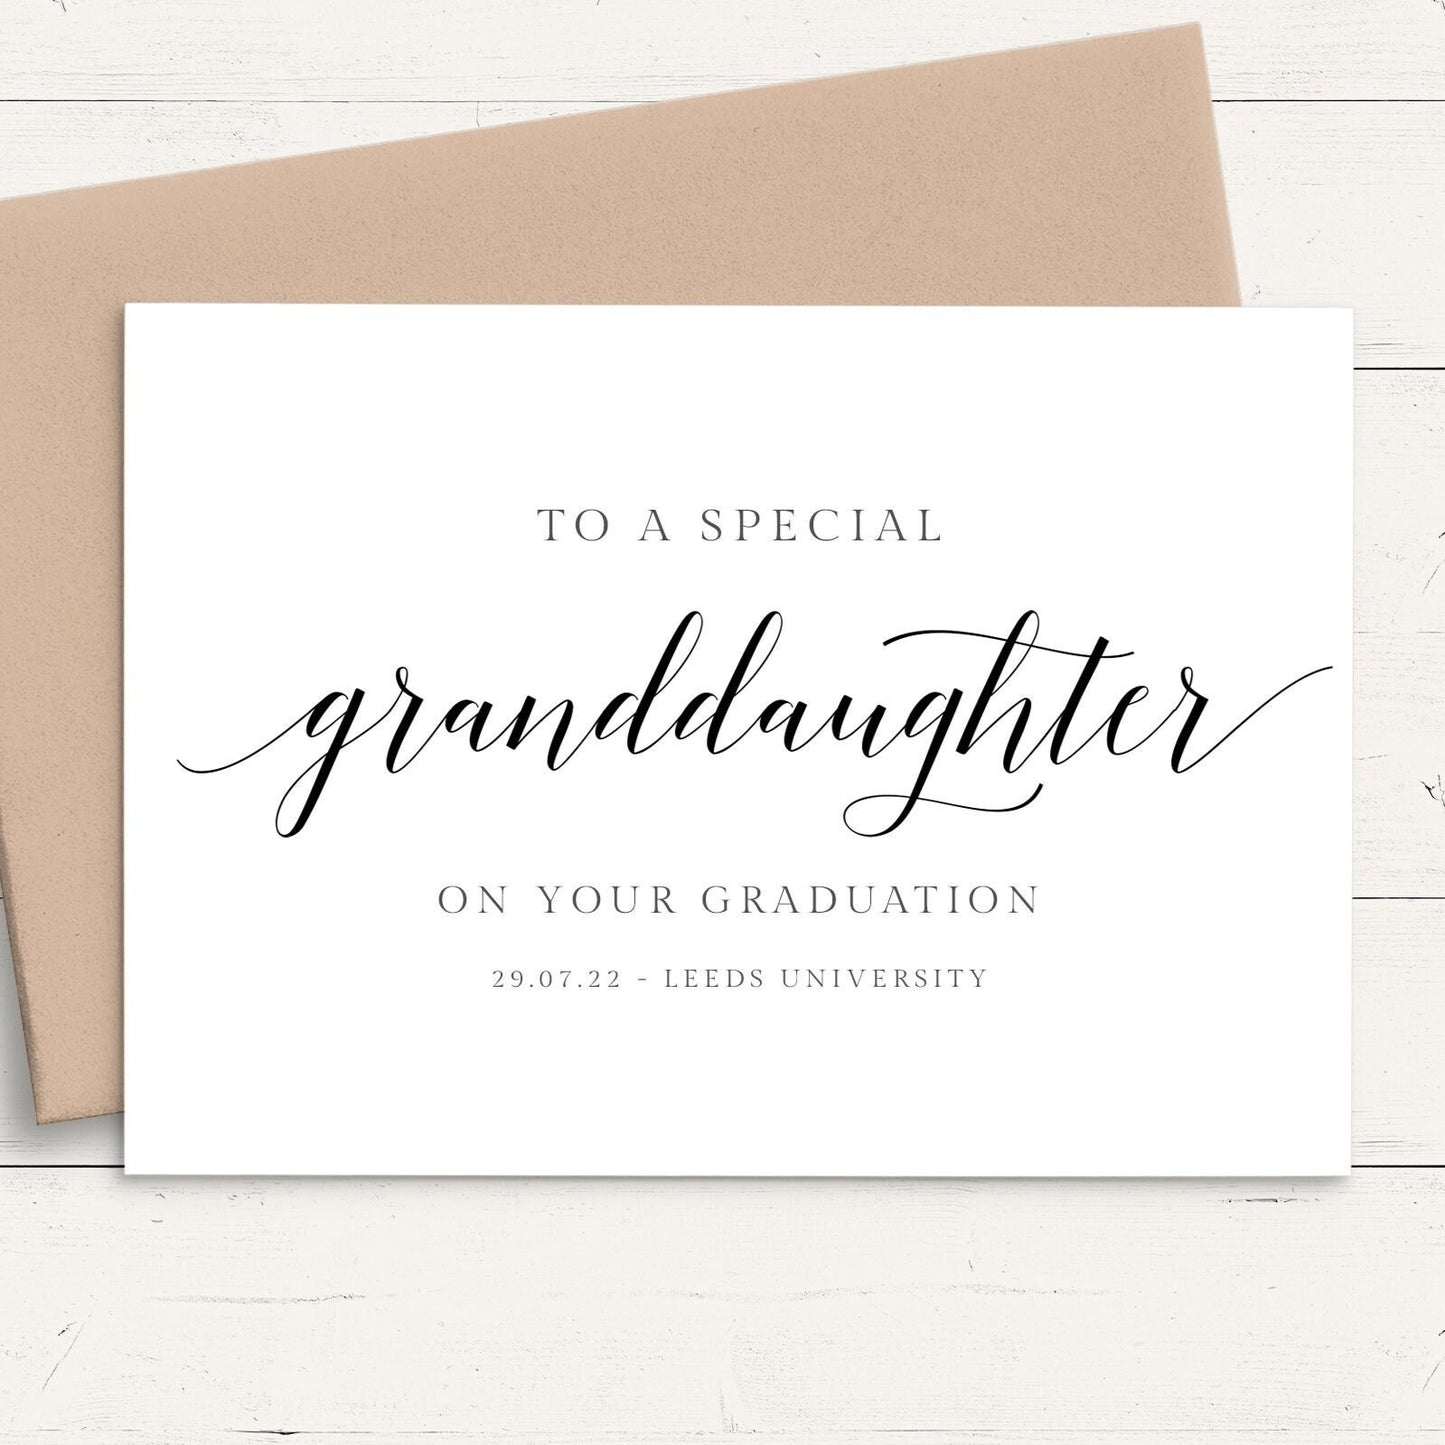 granddaughter graduation card personalised modern script smooth matte white cardstock kraft brown envelope